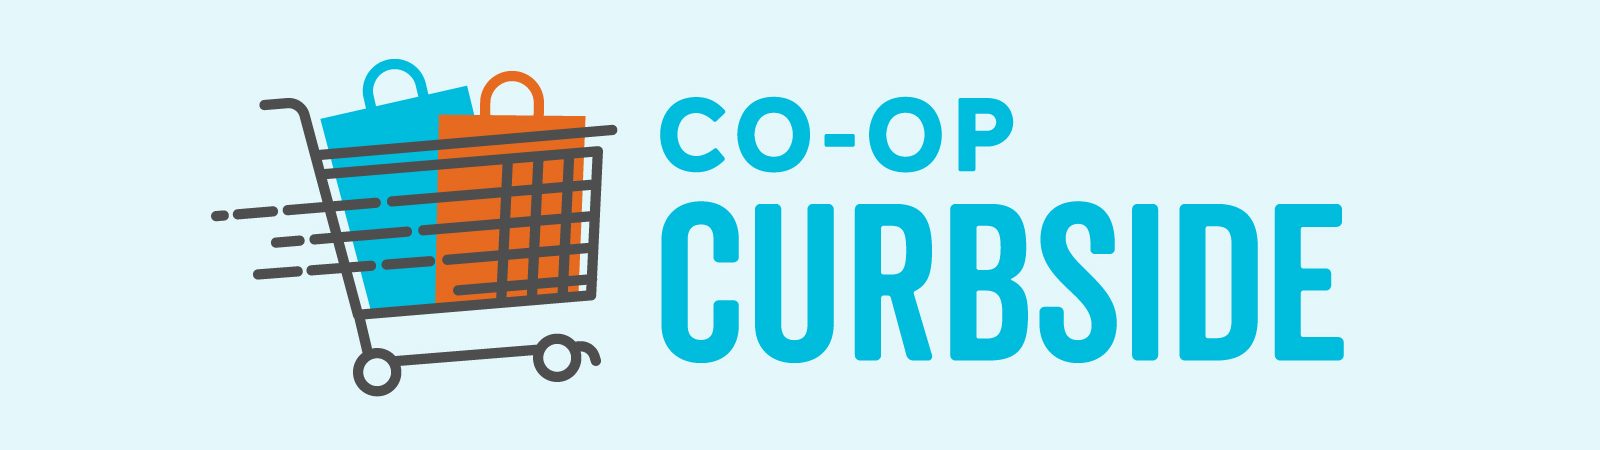 Co-op Curbside Grocery Pickup